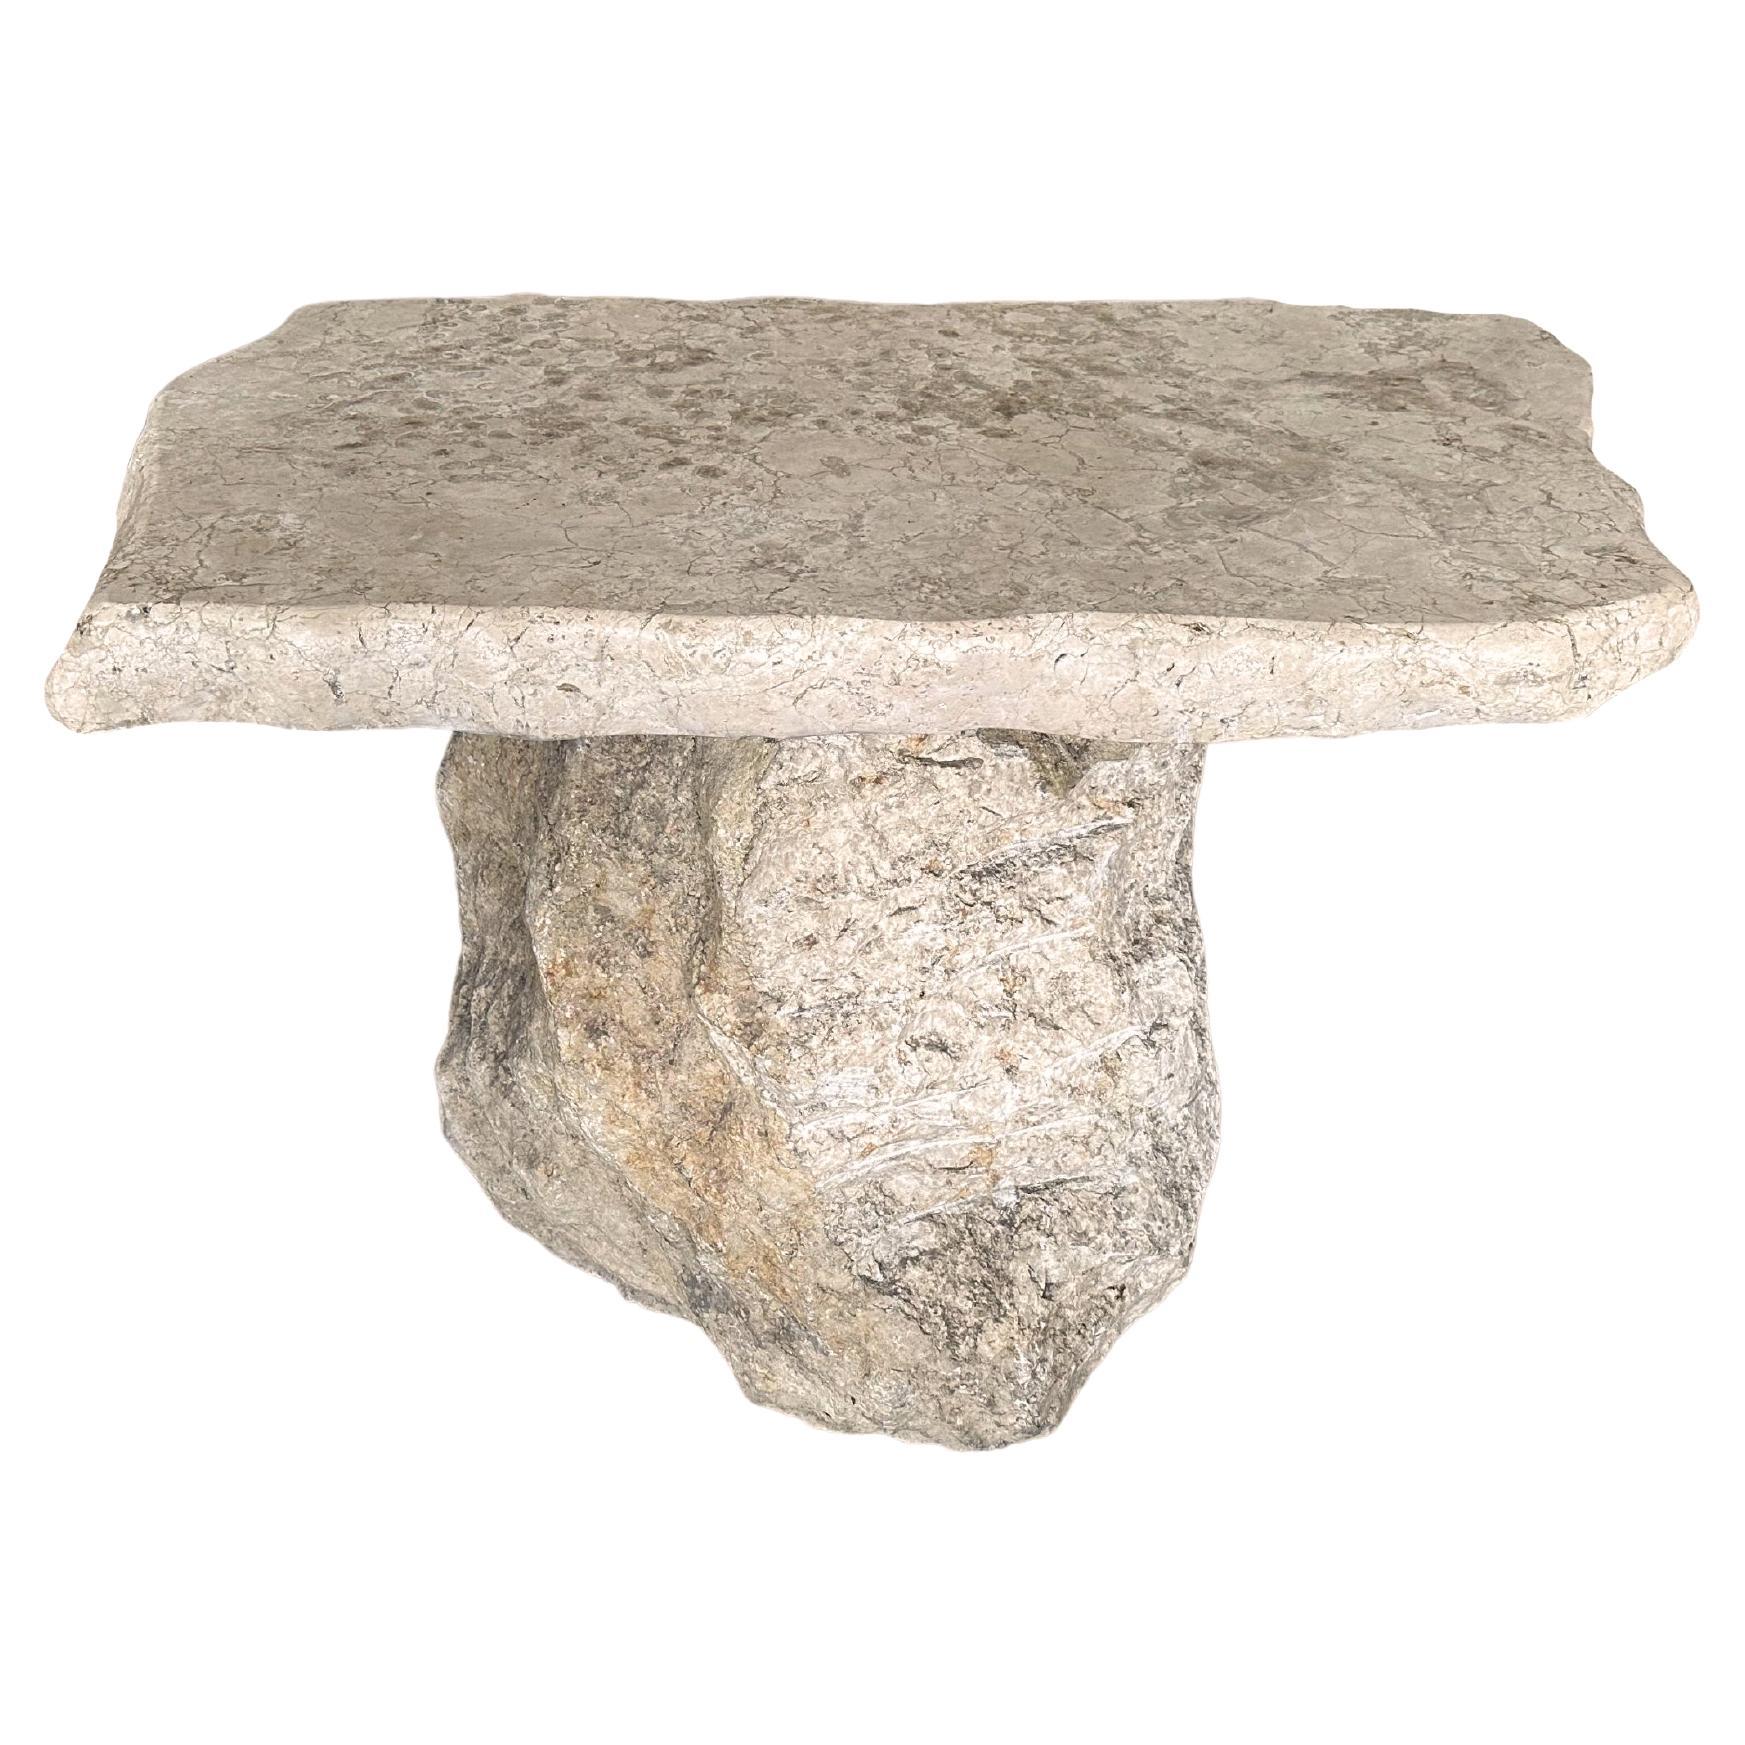 Sculptural Marble Table, Modern Organic